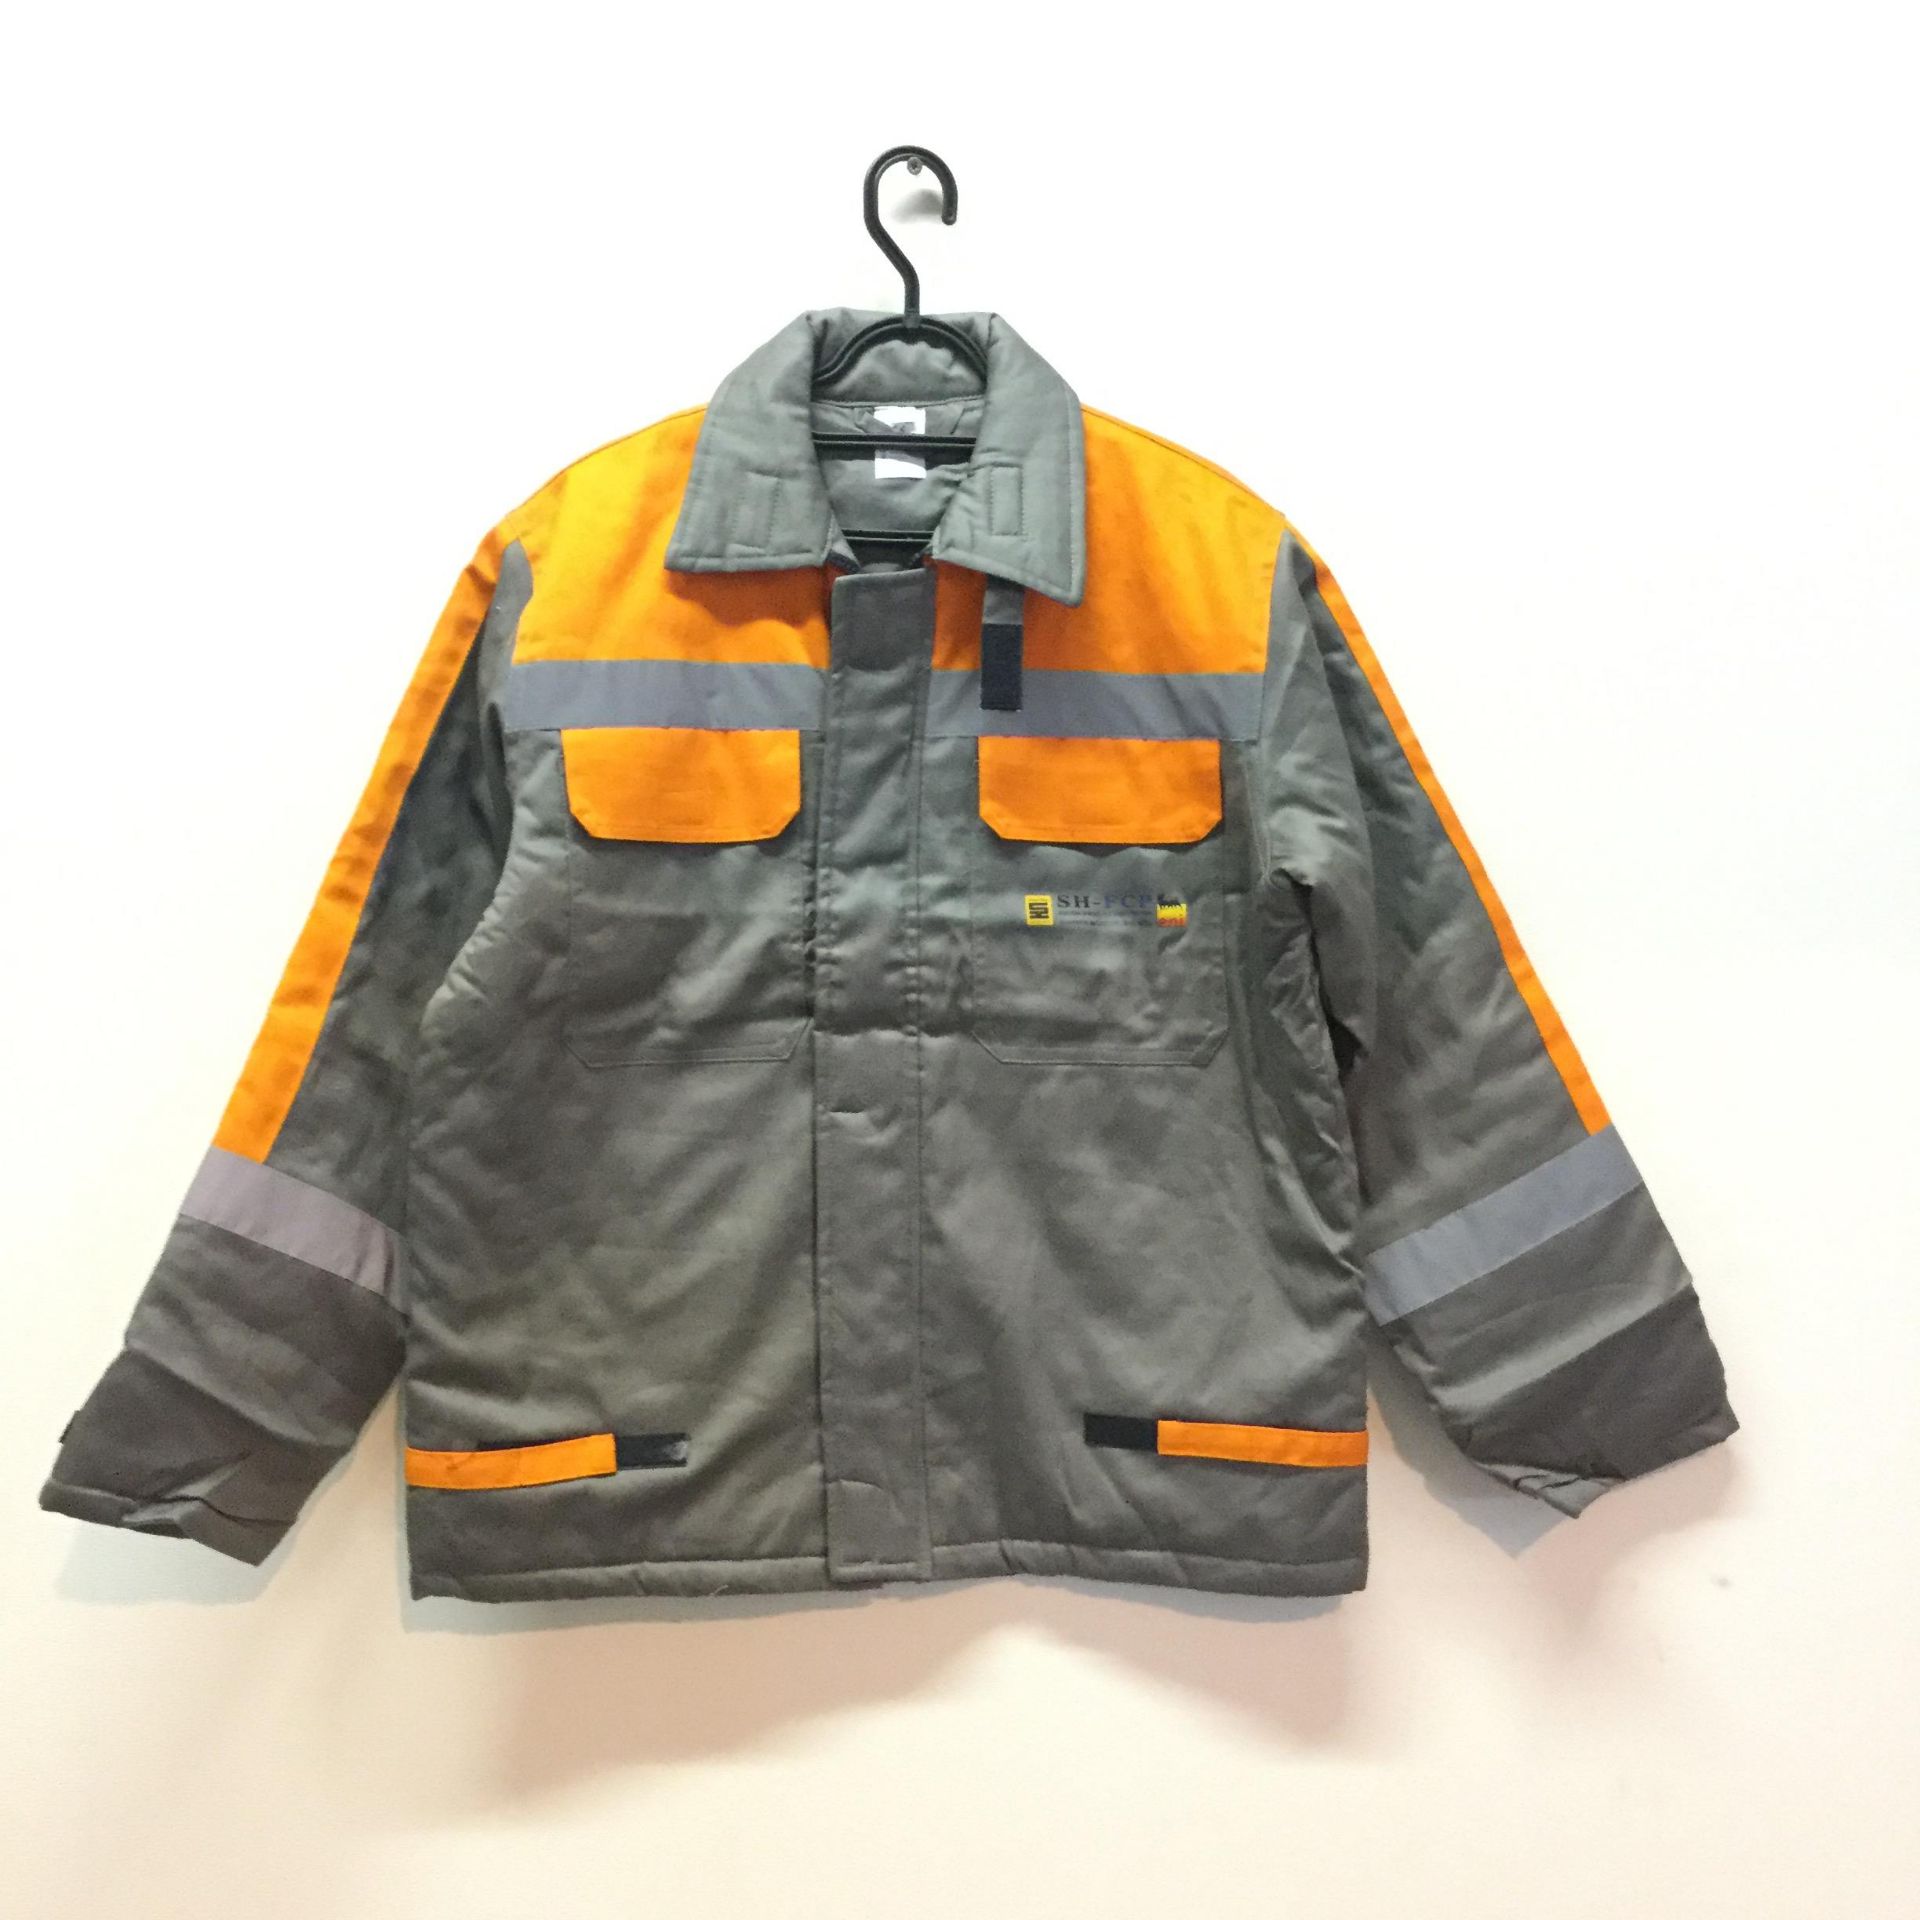 Flame Retardant Winter Jacket - Size 54